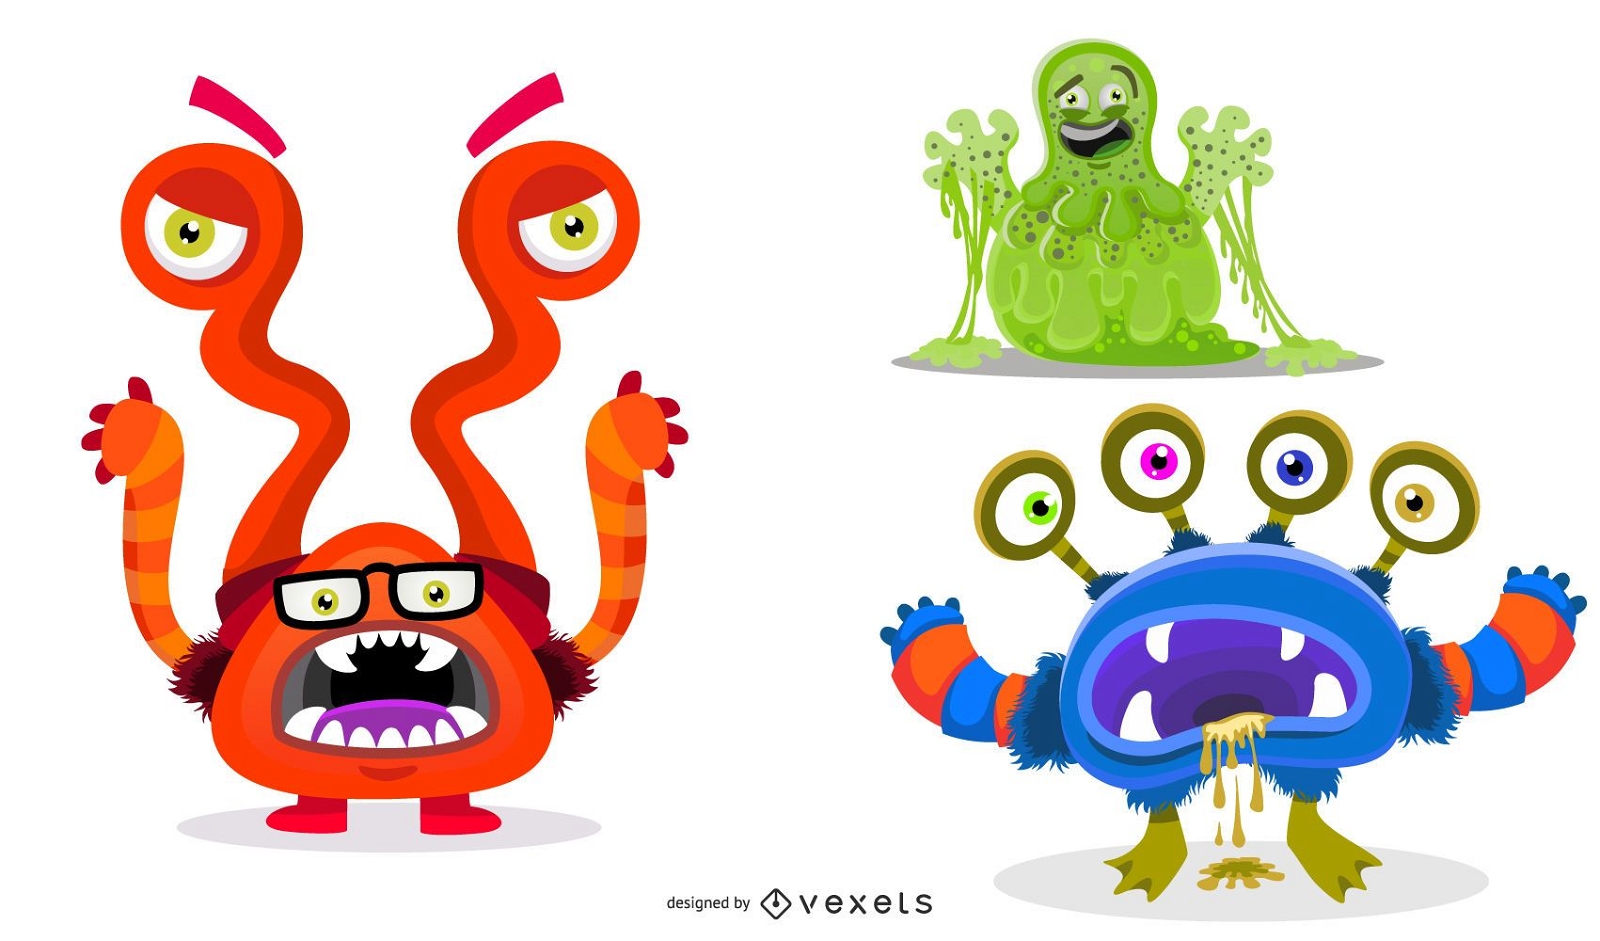 Cute illustrated monster cartoons